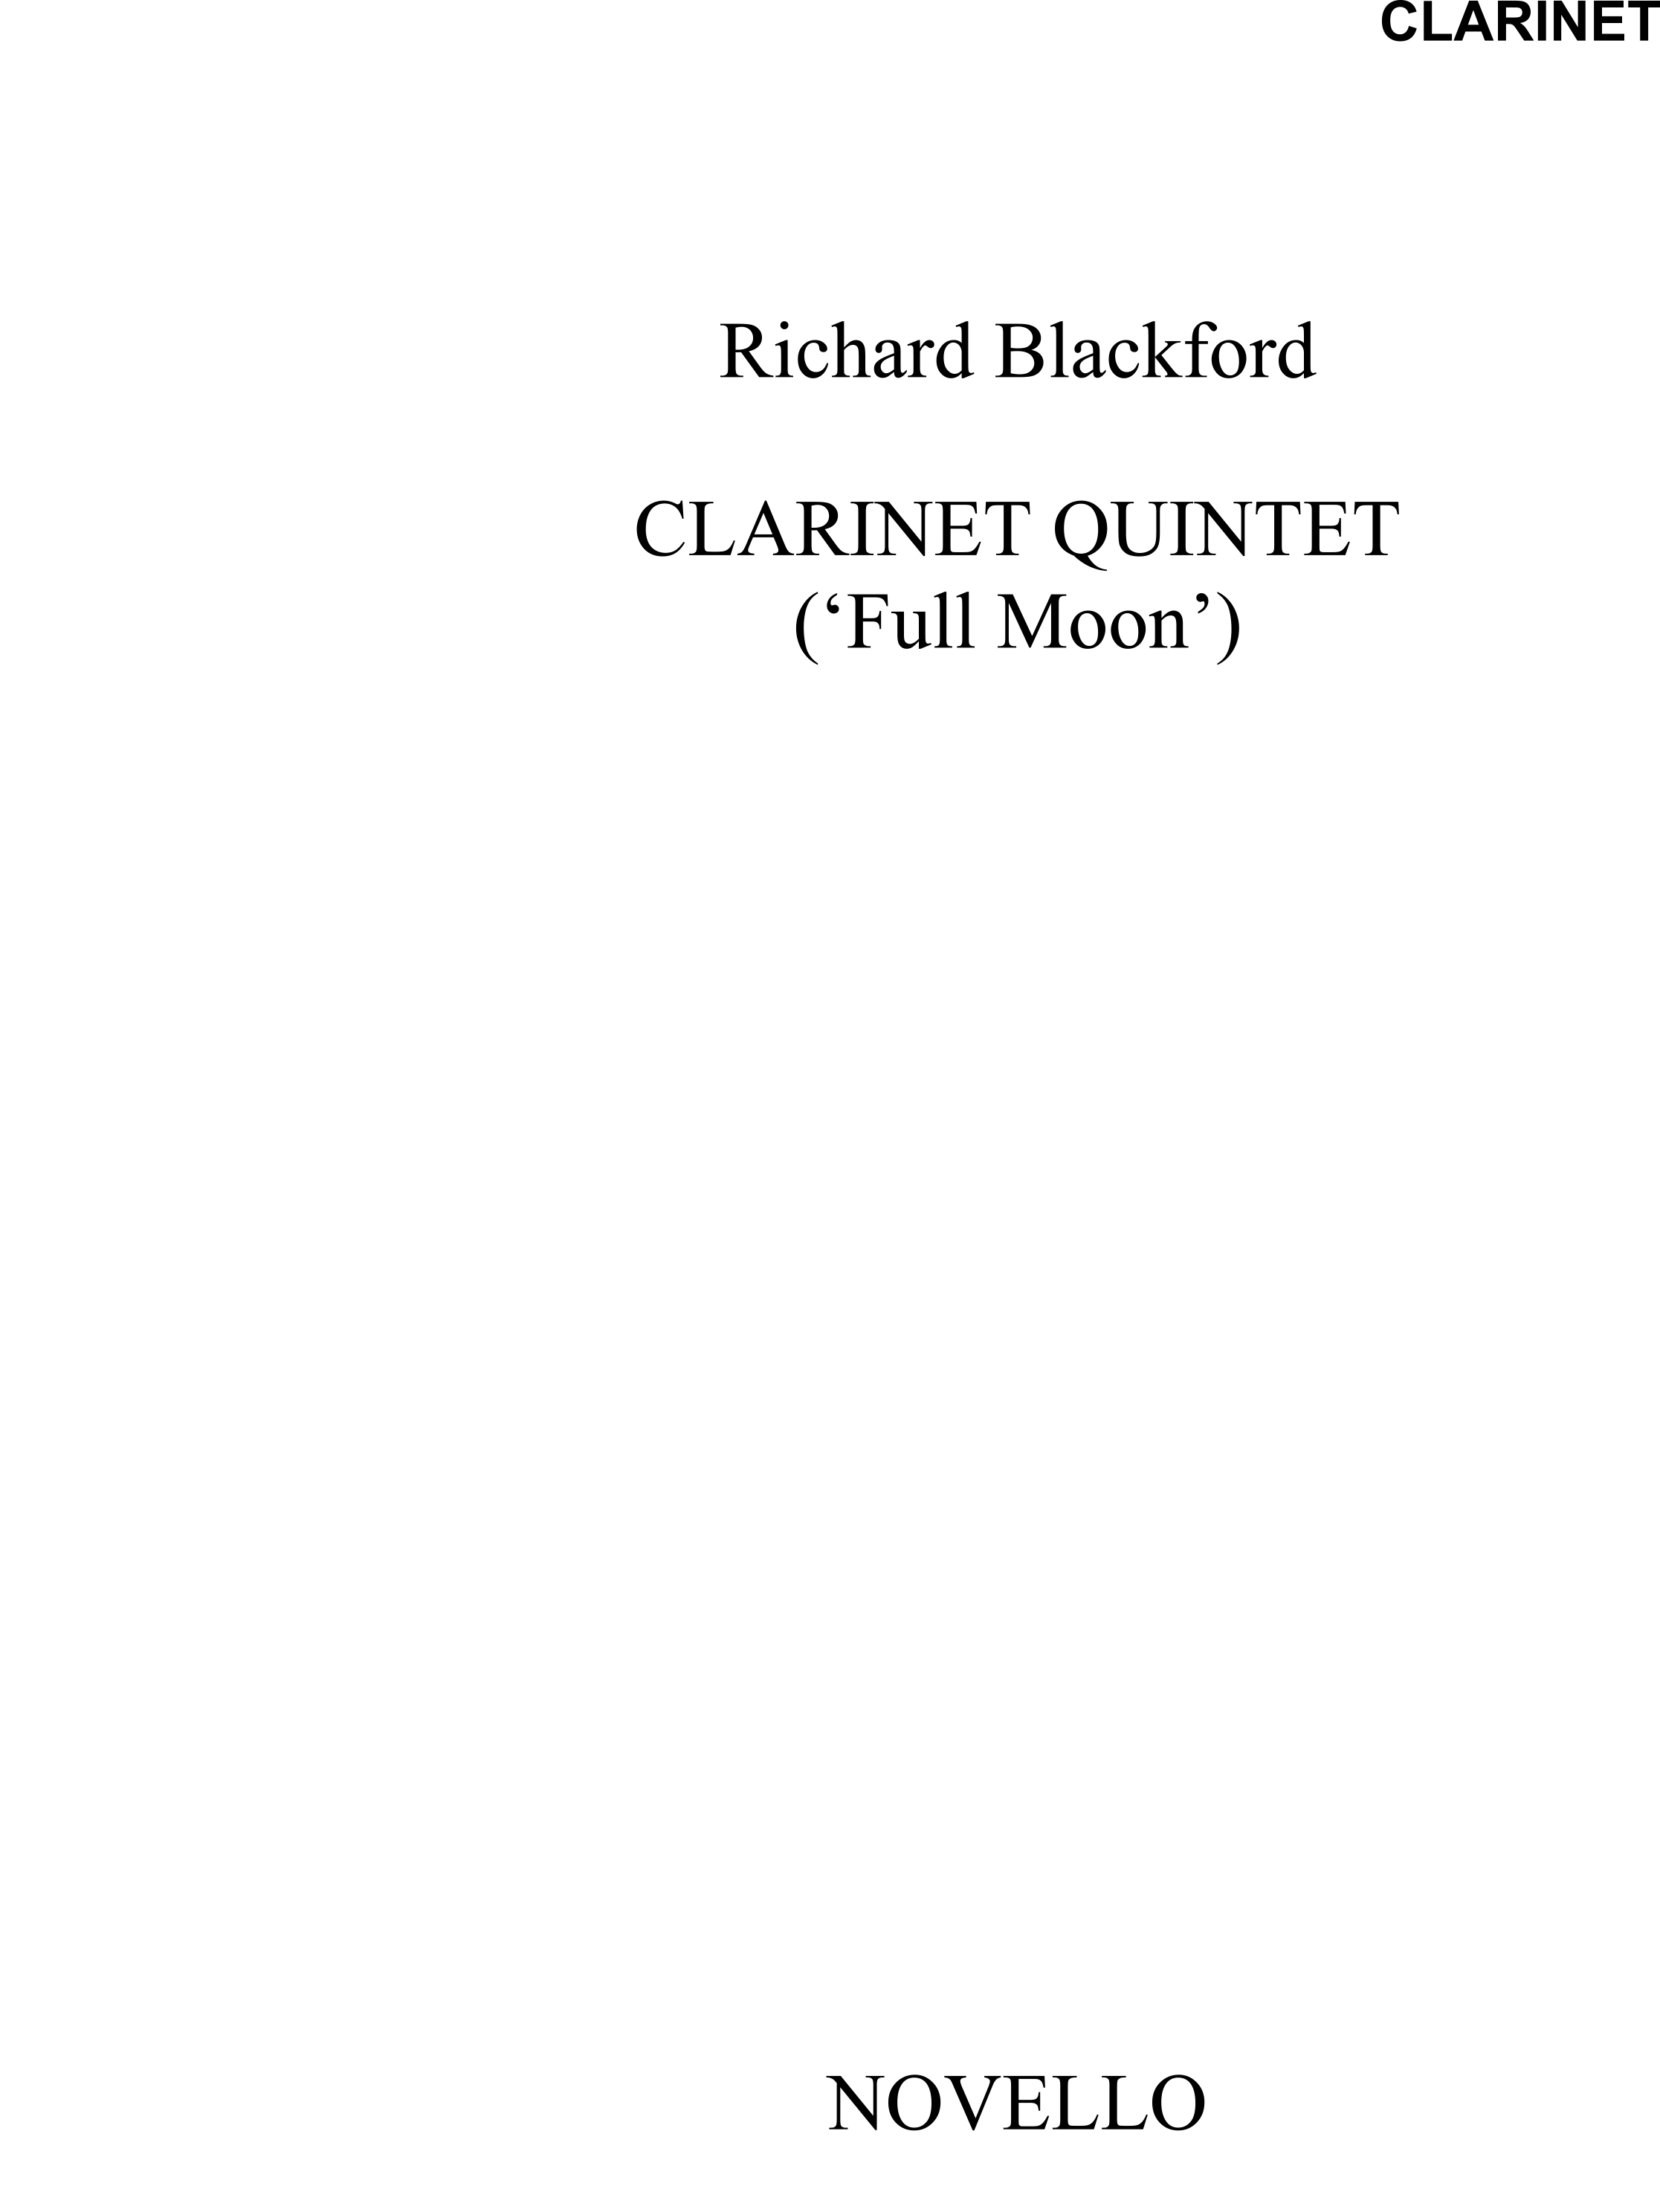 Richard Blackford: Full Moon - Clarinet Quintet (Parts): Clarinet: Parts